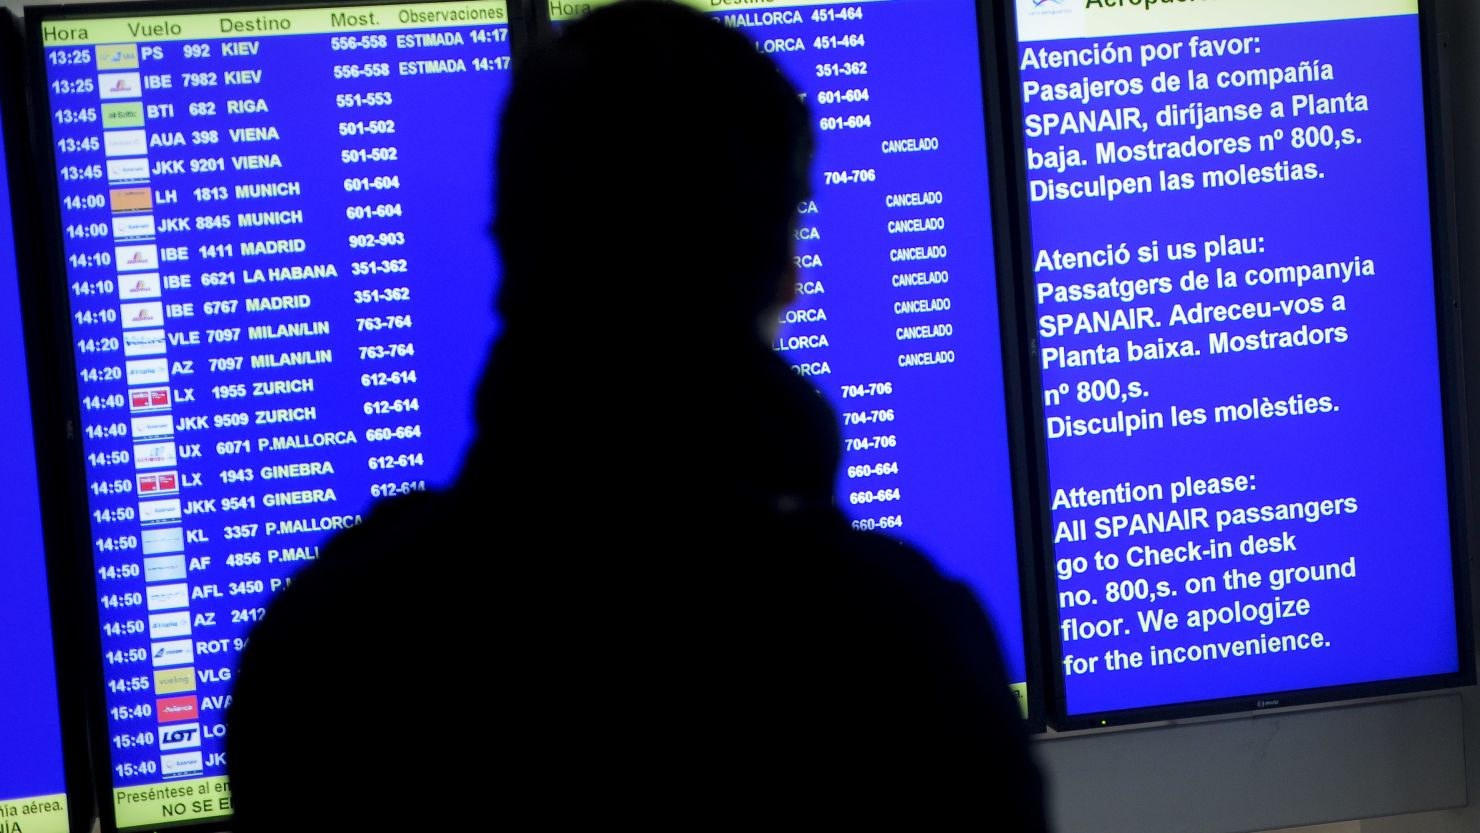 A board displayes information on canceled Spanair's flights at El Prat International Airport in Barcelona.